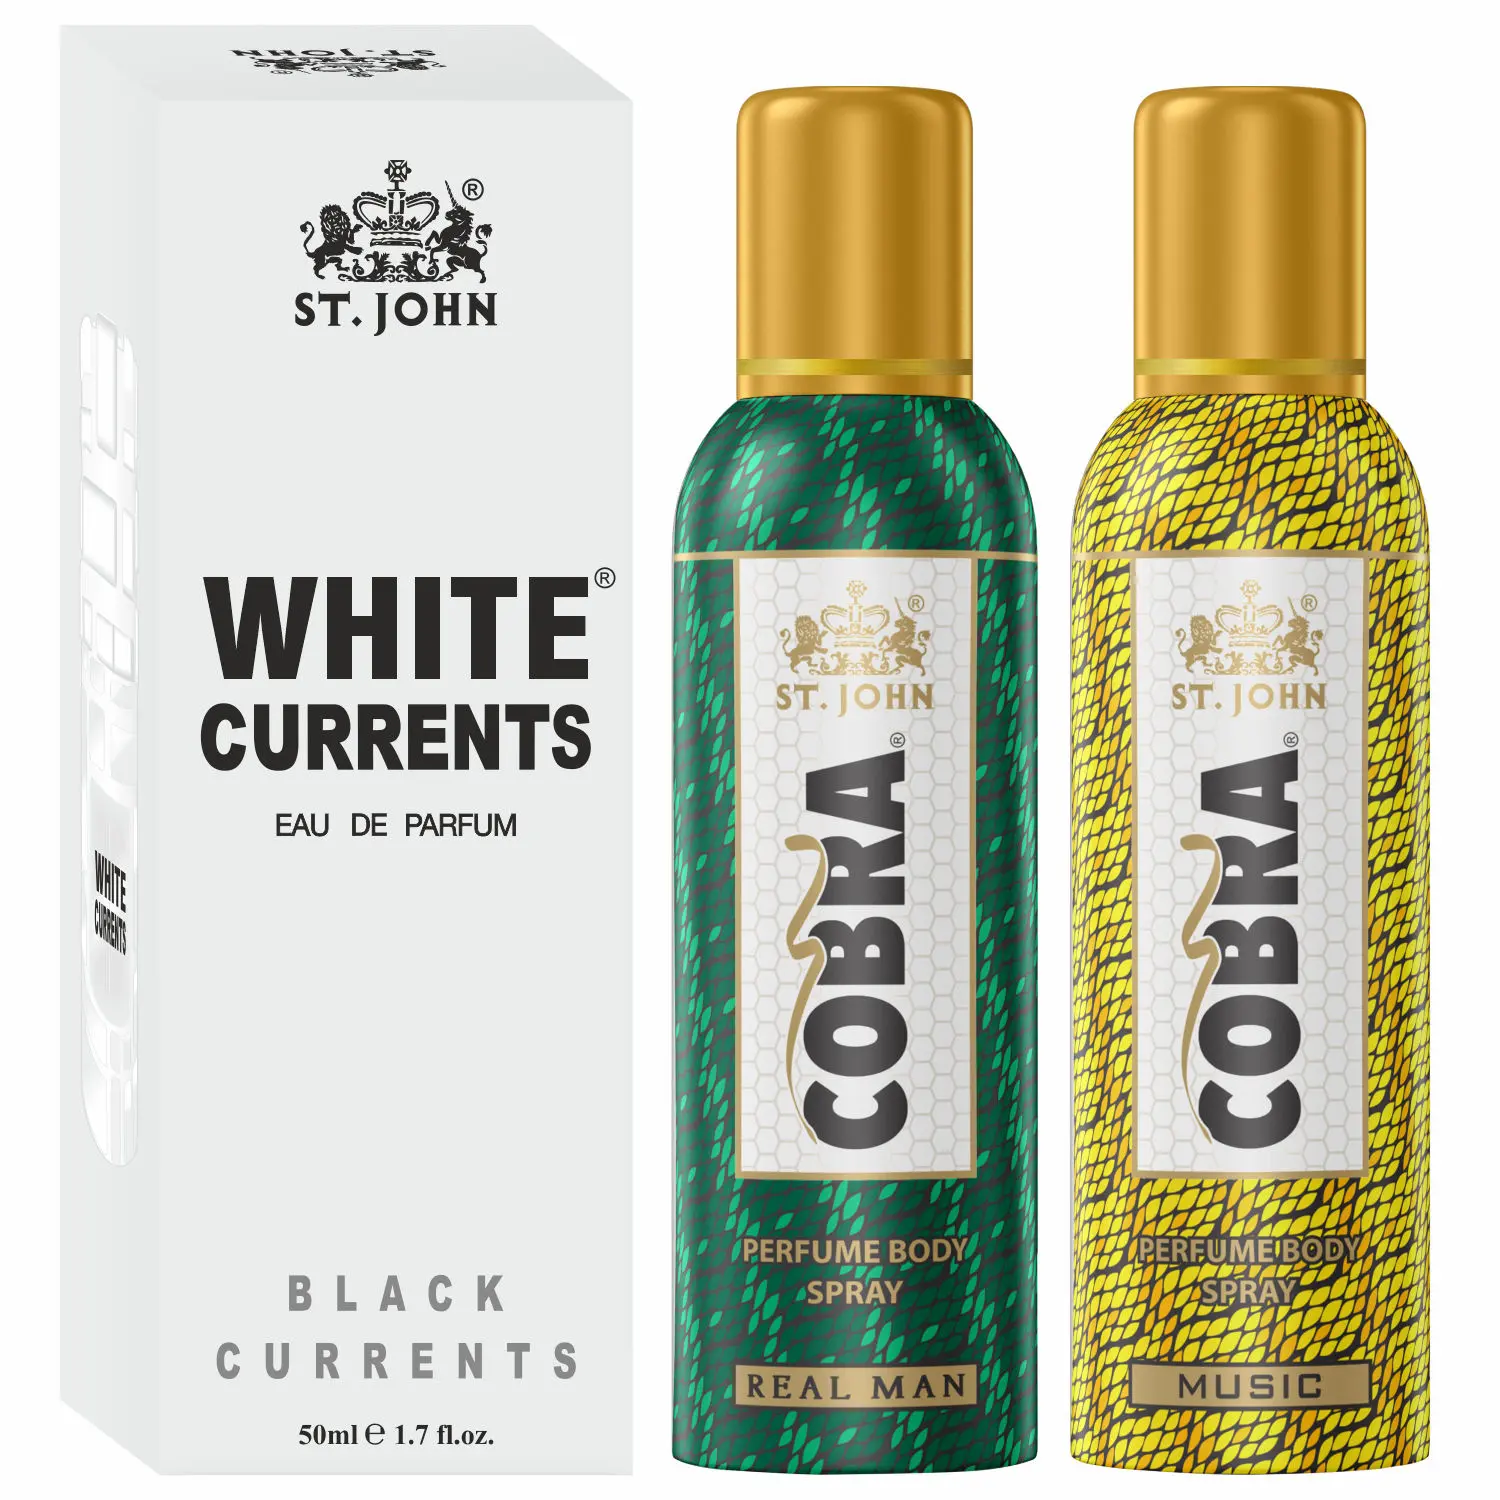 ST-JOHN Cobra No Gas Deodorant Music, Real Man 100ml each & White Current 50ml Combo Perfume Body Spray For Men & Women (250 ml, Pack of 3)